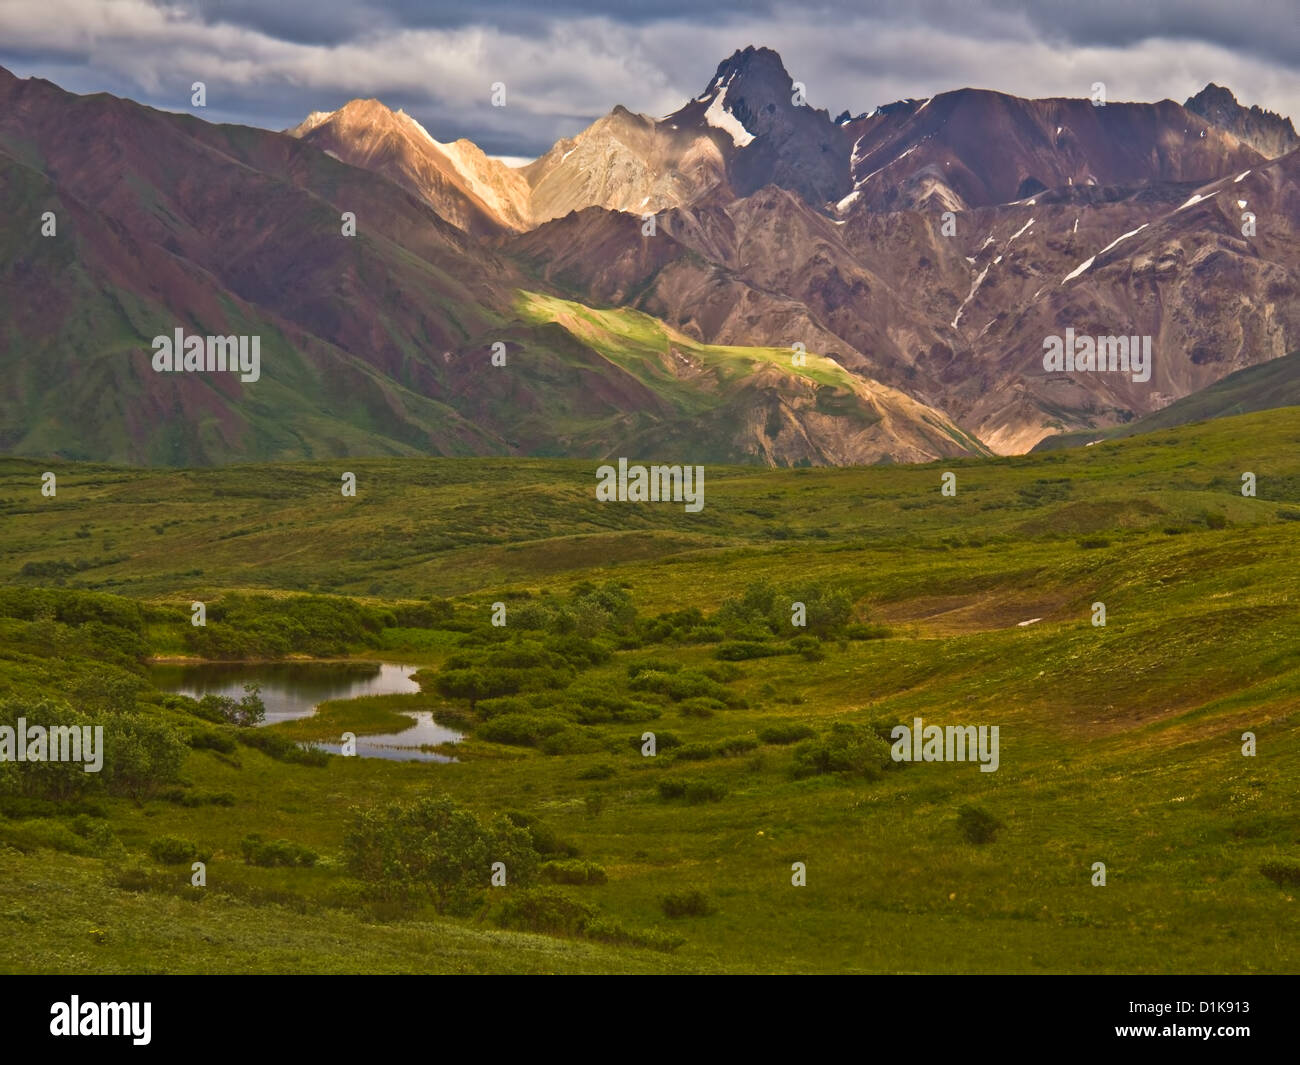 Colorful mountains with greenery, Denali Alaska Stock Photo